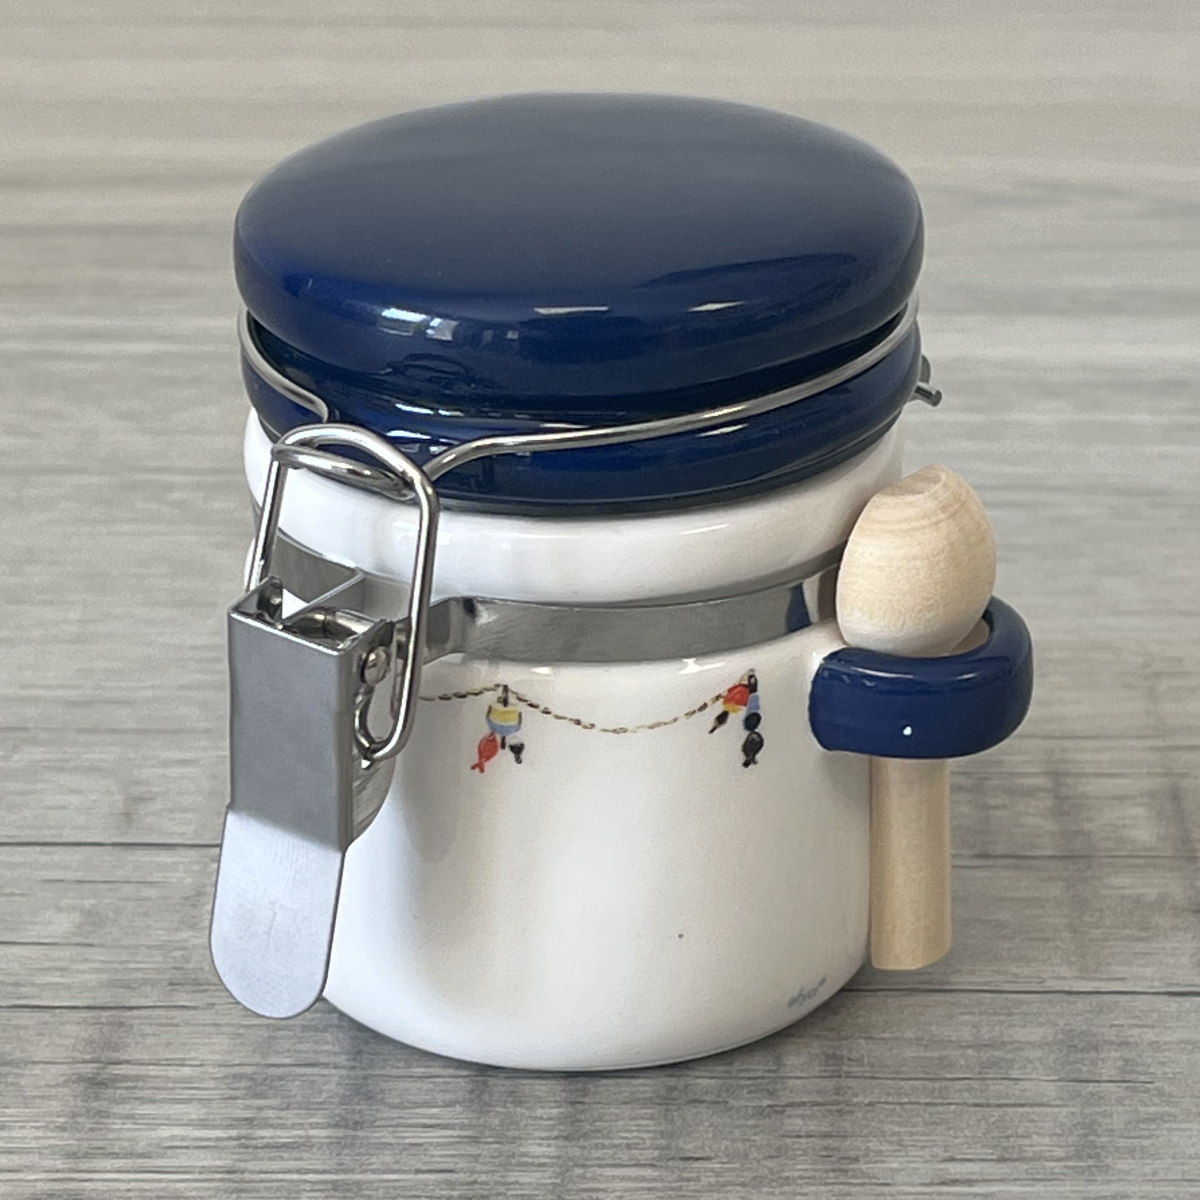 Salt pot with wooden spoon